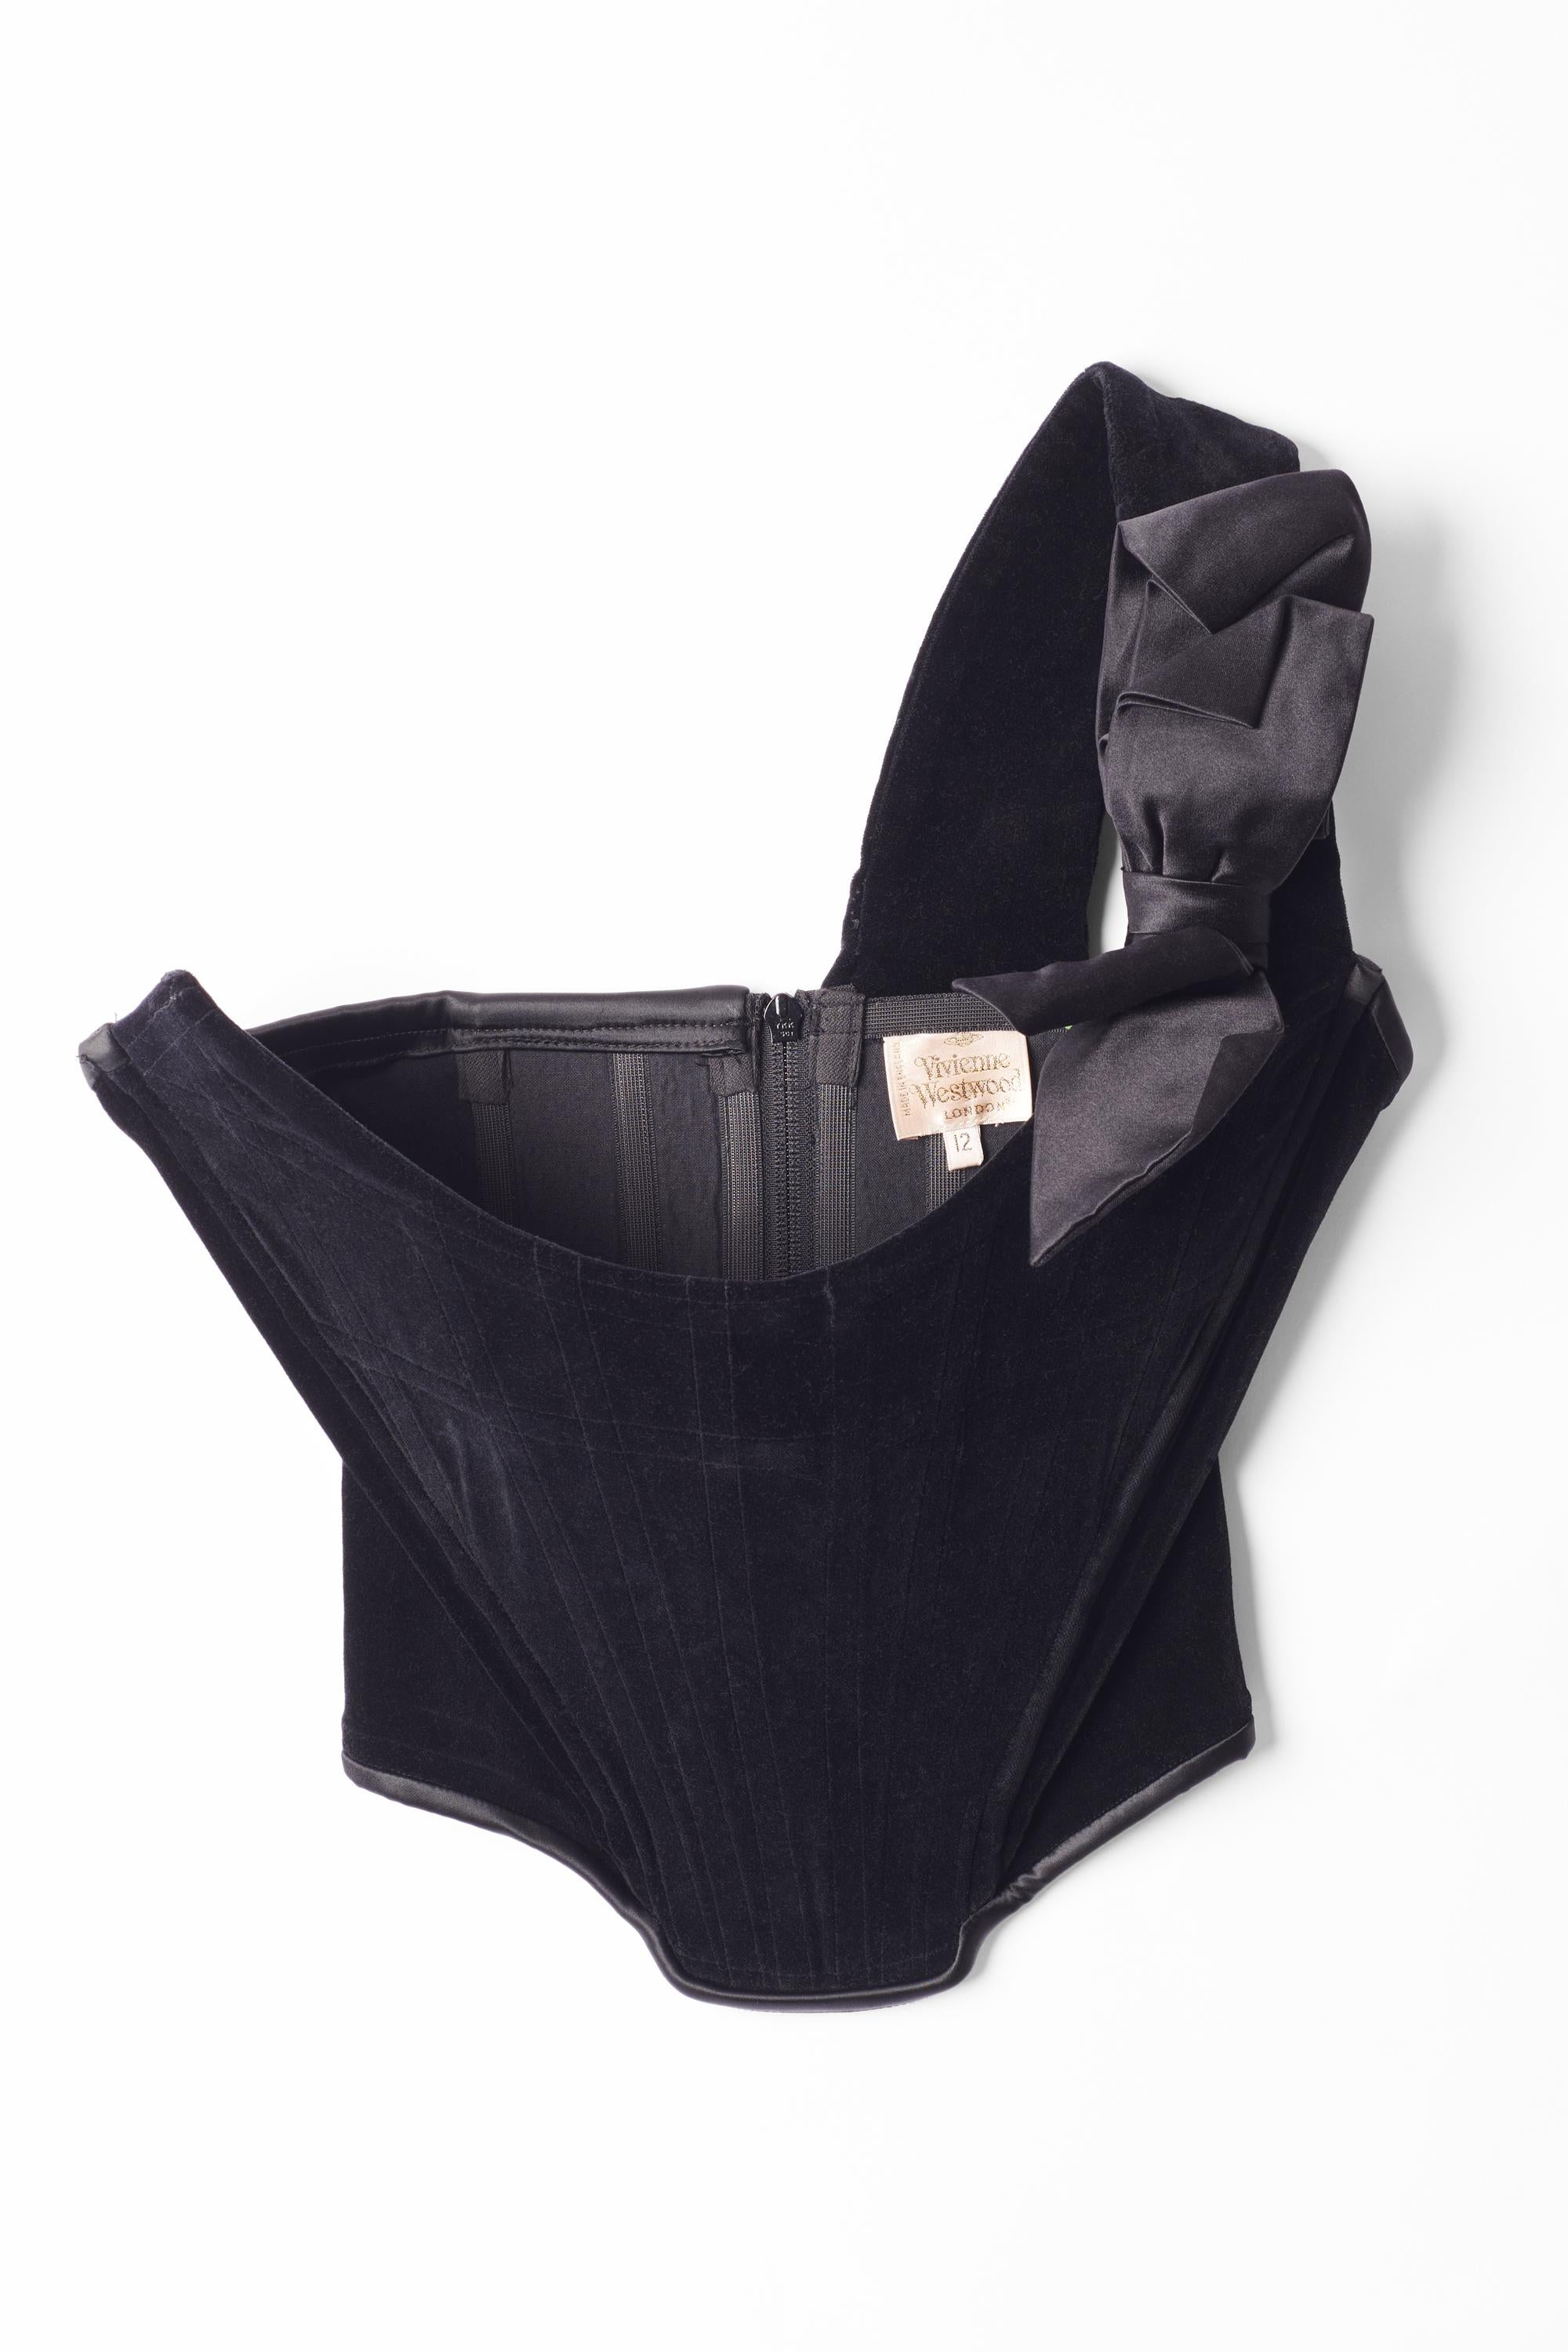 Vivienne Westwood  Vintage 1993 Black Velvet Bow Corset In Excellent Condition In London, GB